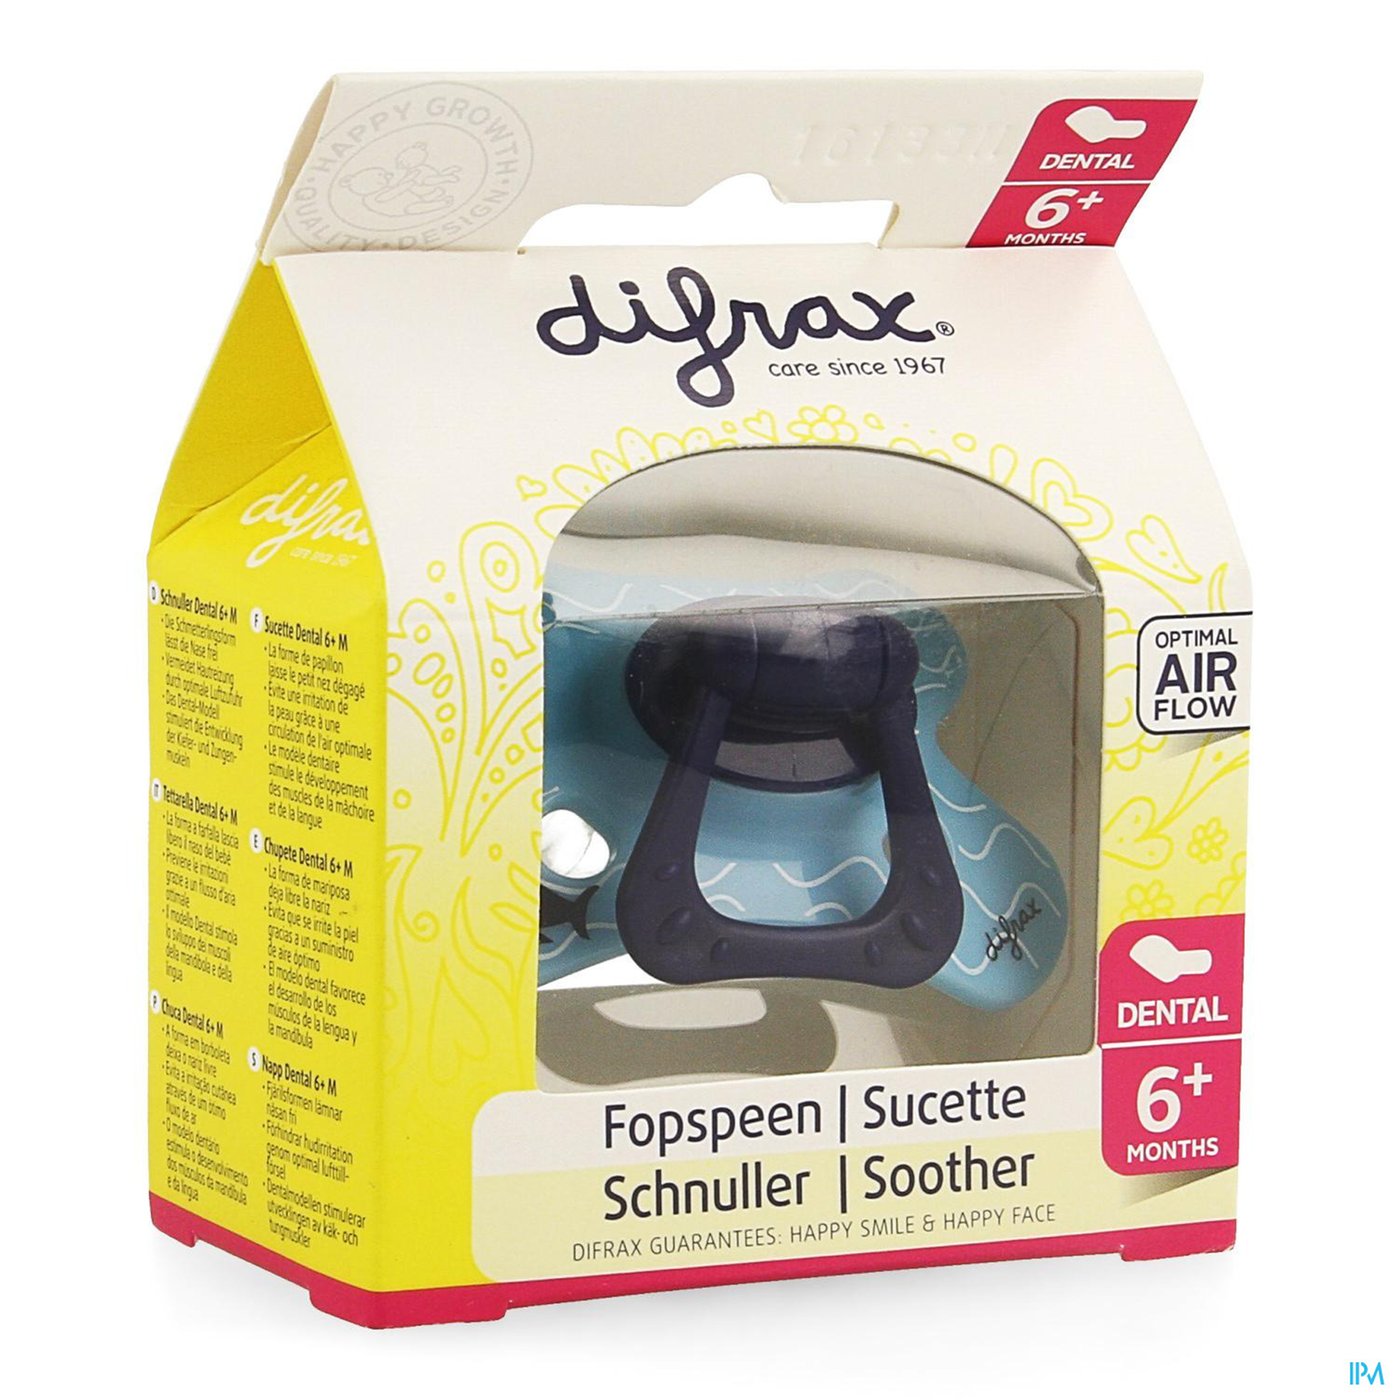 Difrax Fopspeen Sil Dental+ring +6m 800 packshot